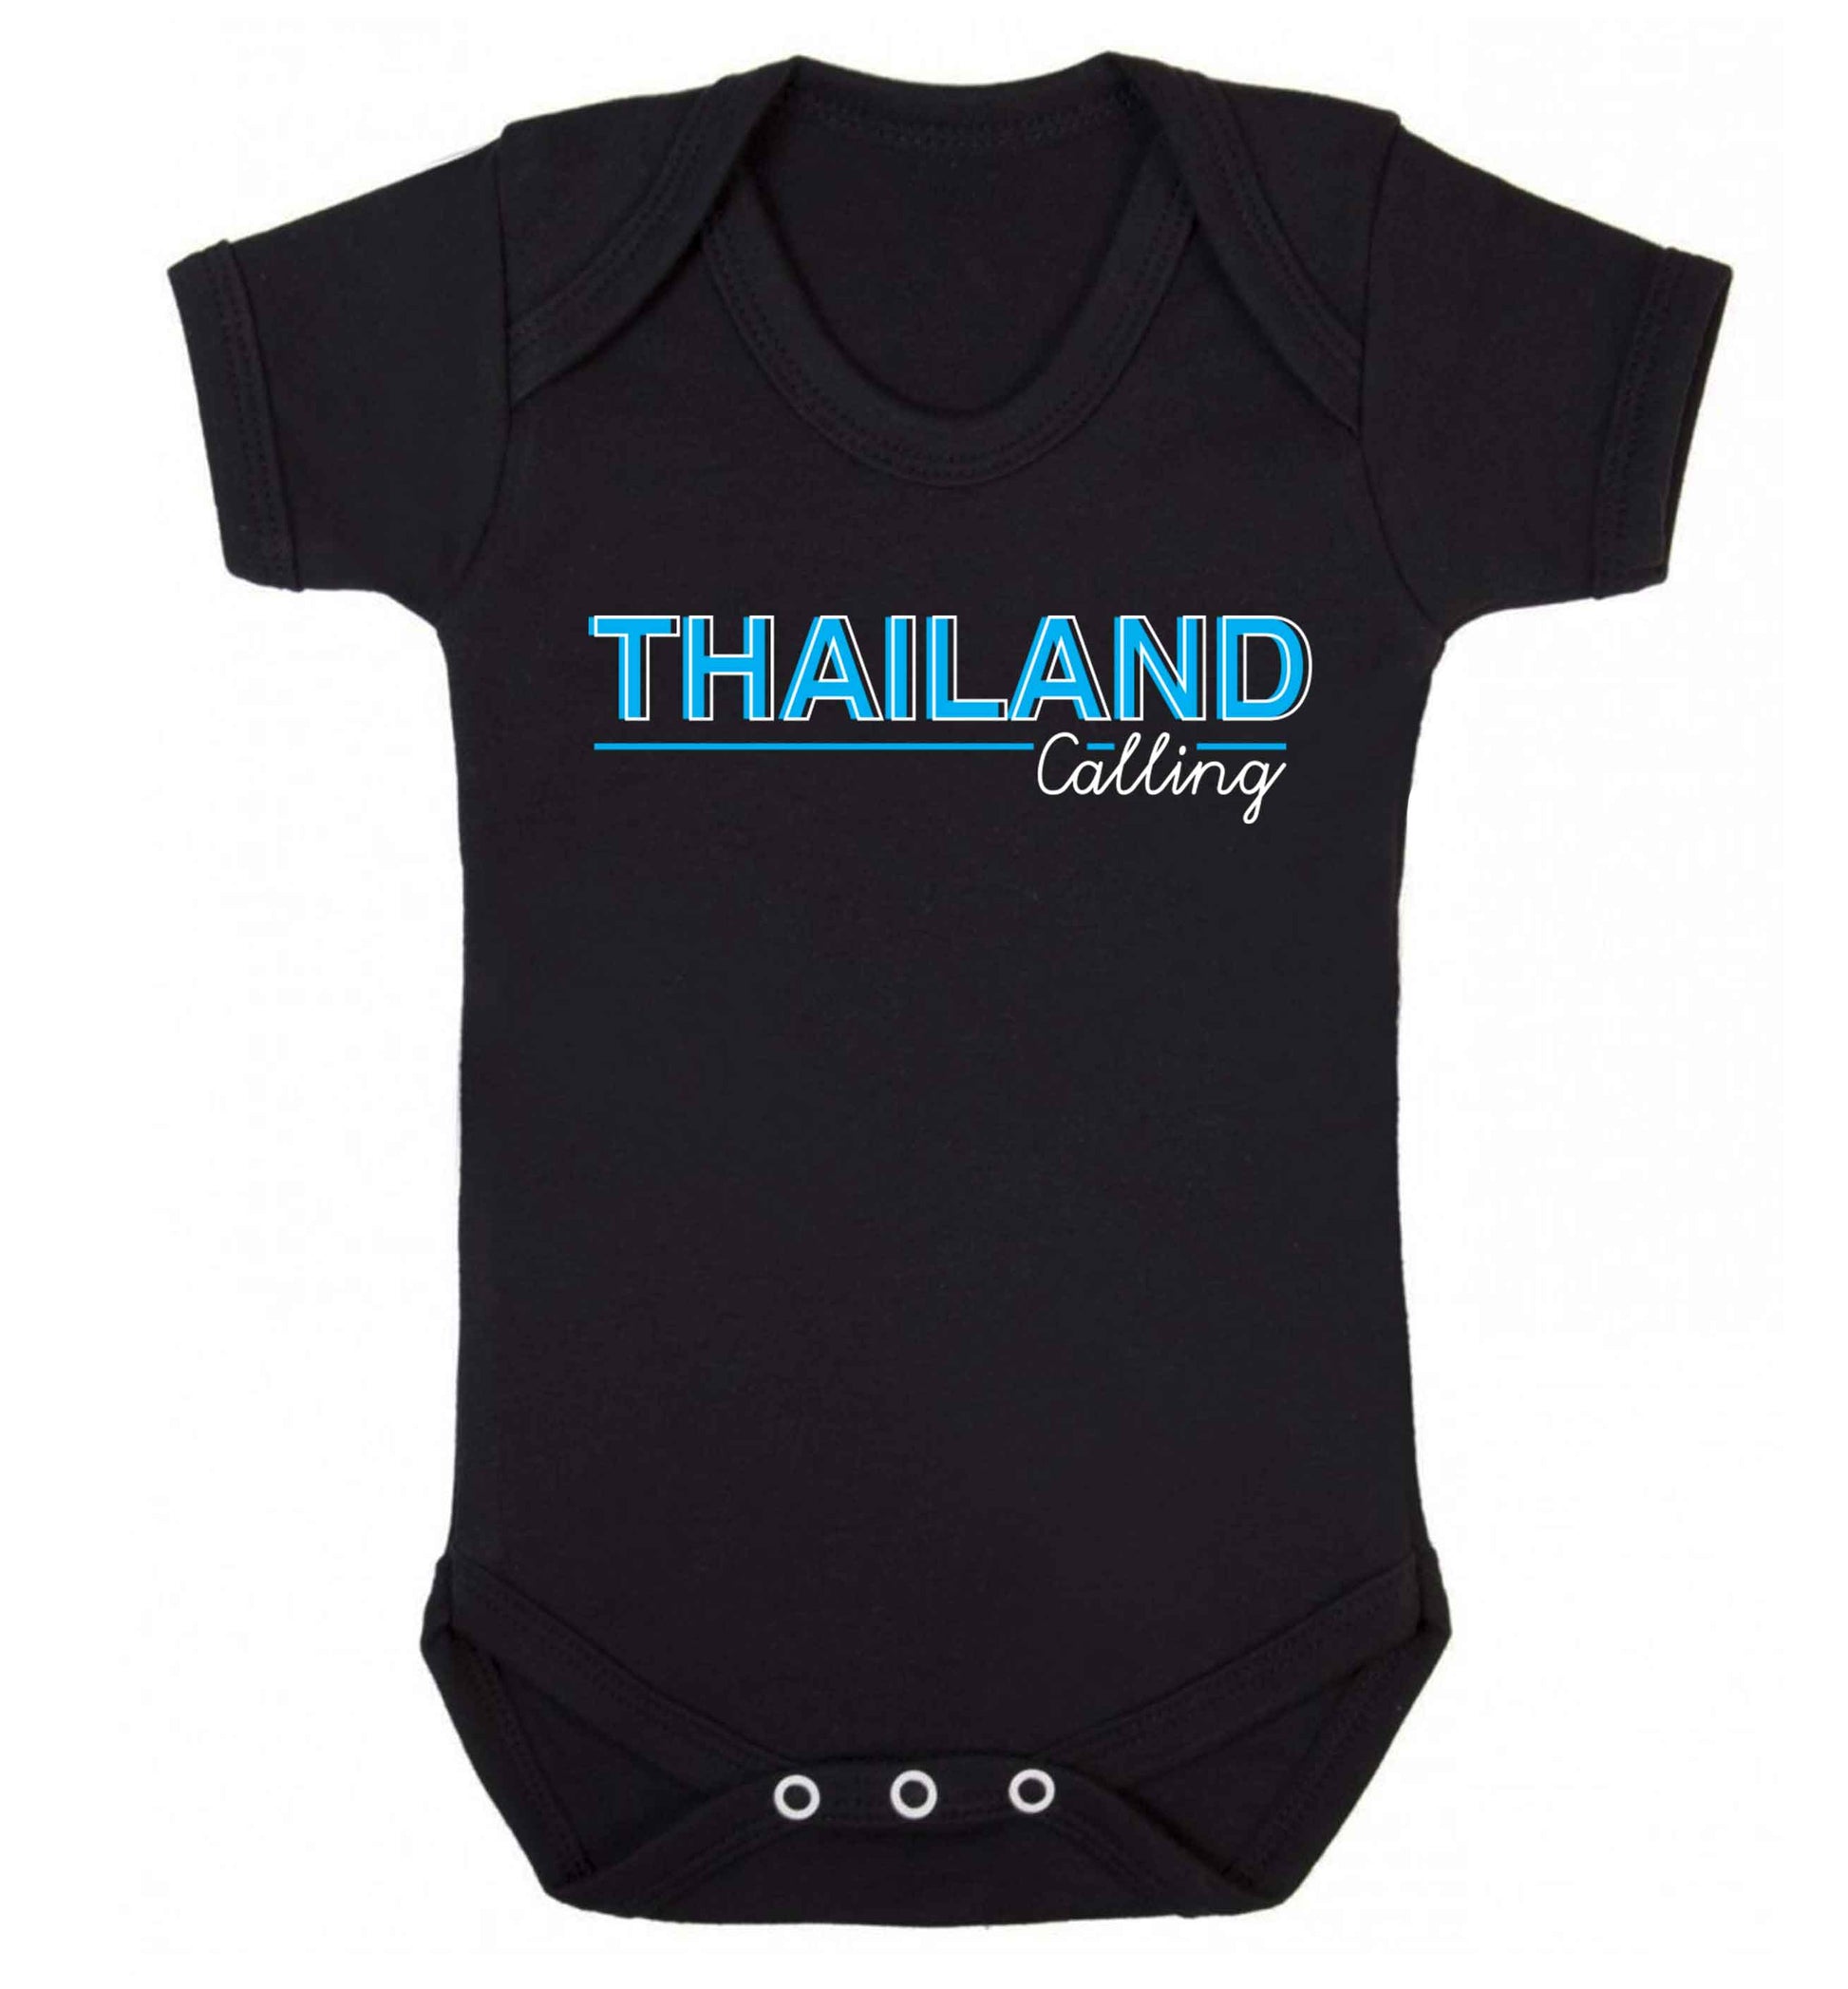 Thailand calling Baby Vest black 18-24 months